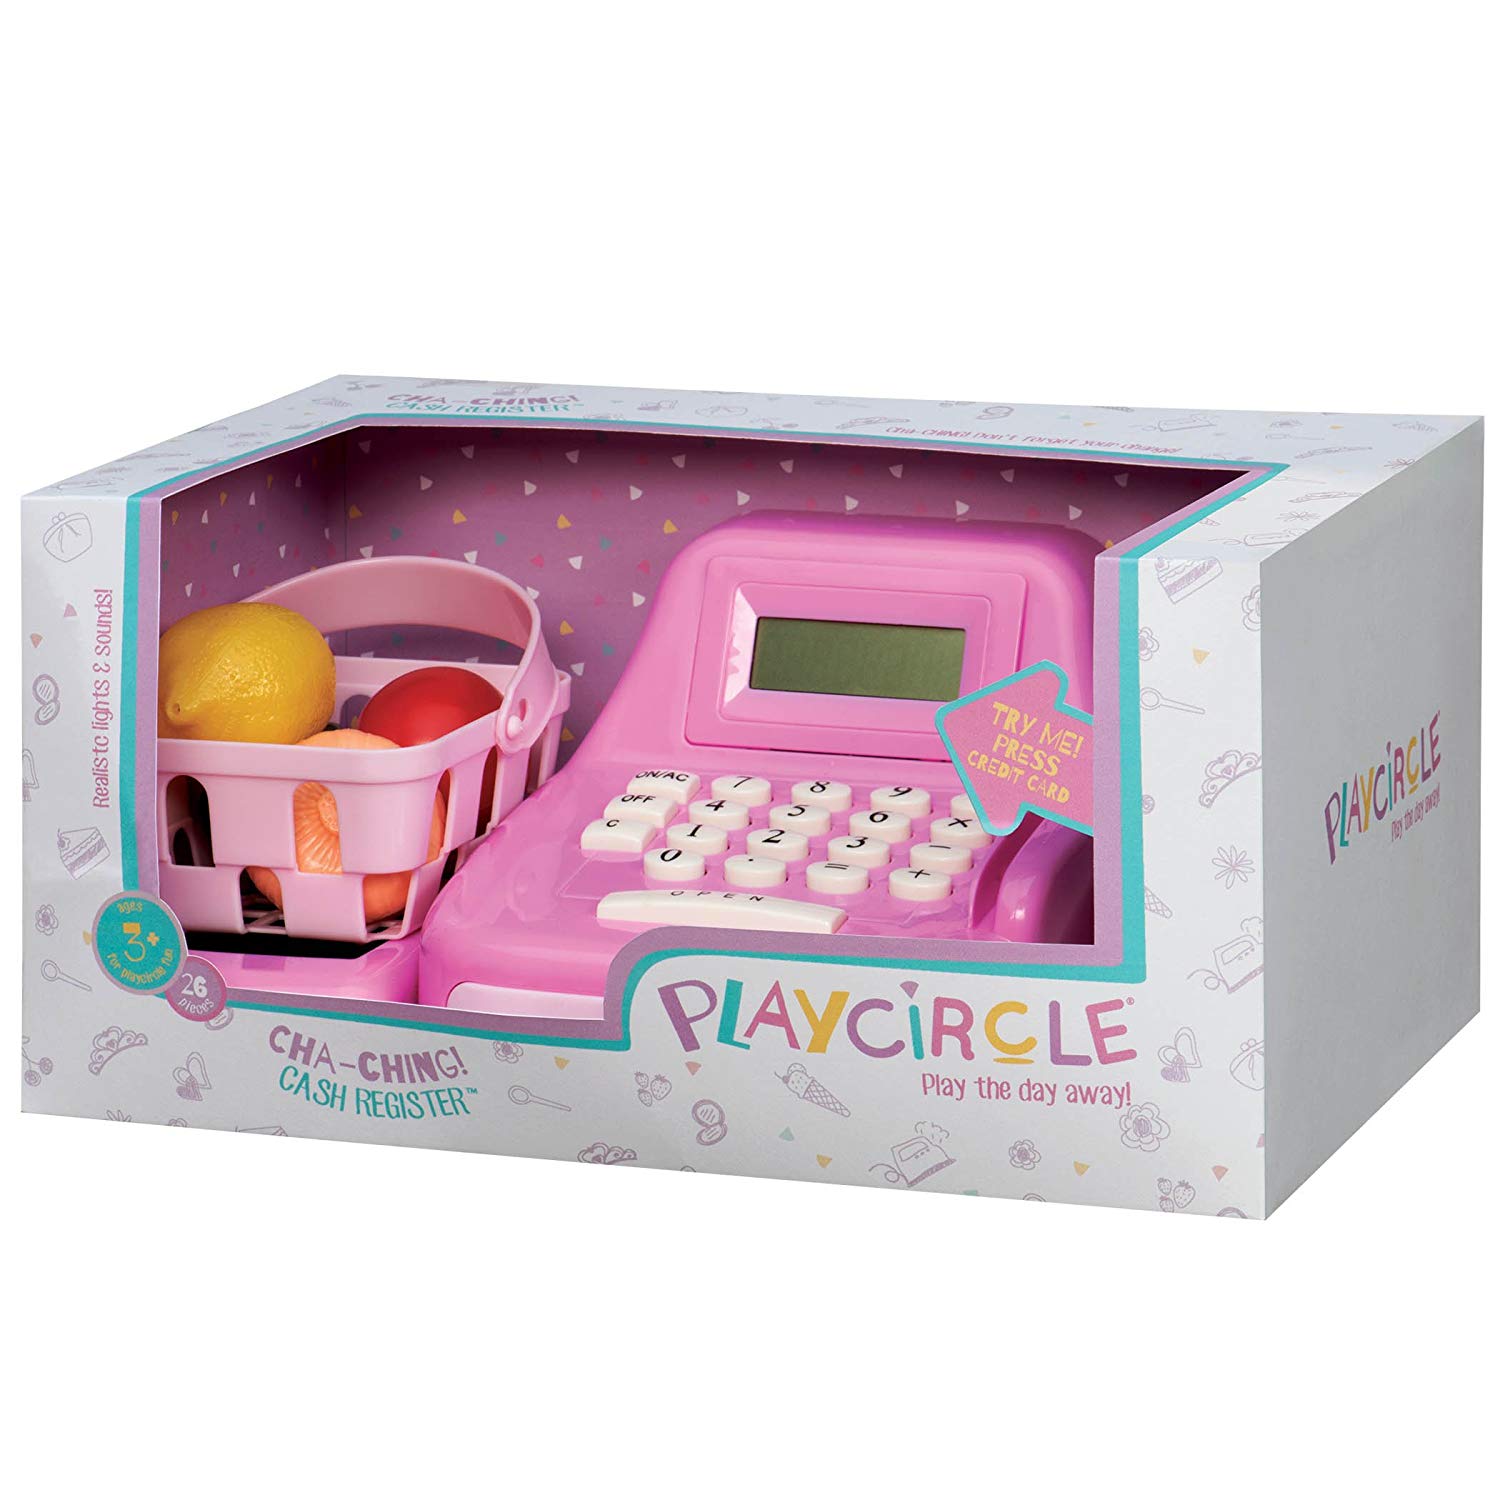 Play Circle - Caja registradora de juguete, Rosado – VIOLETAROSA